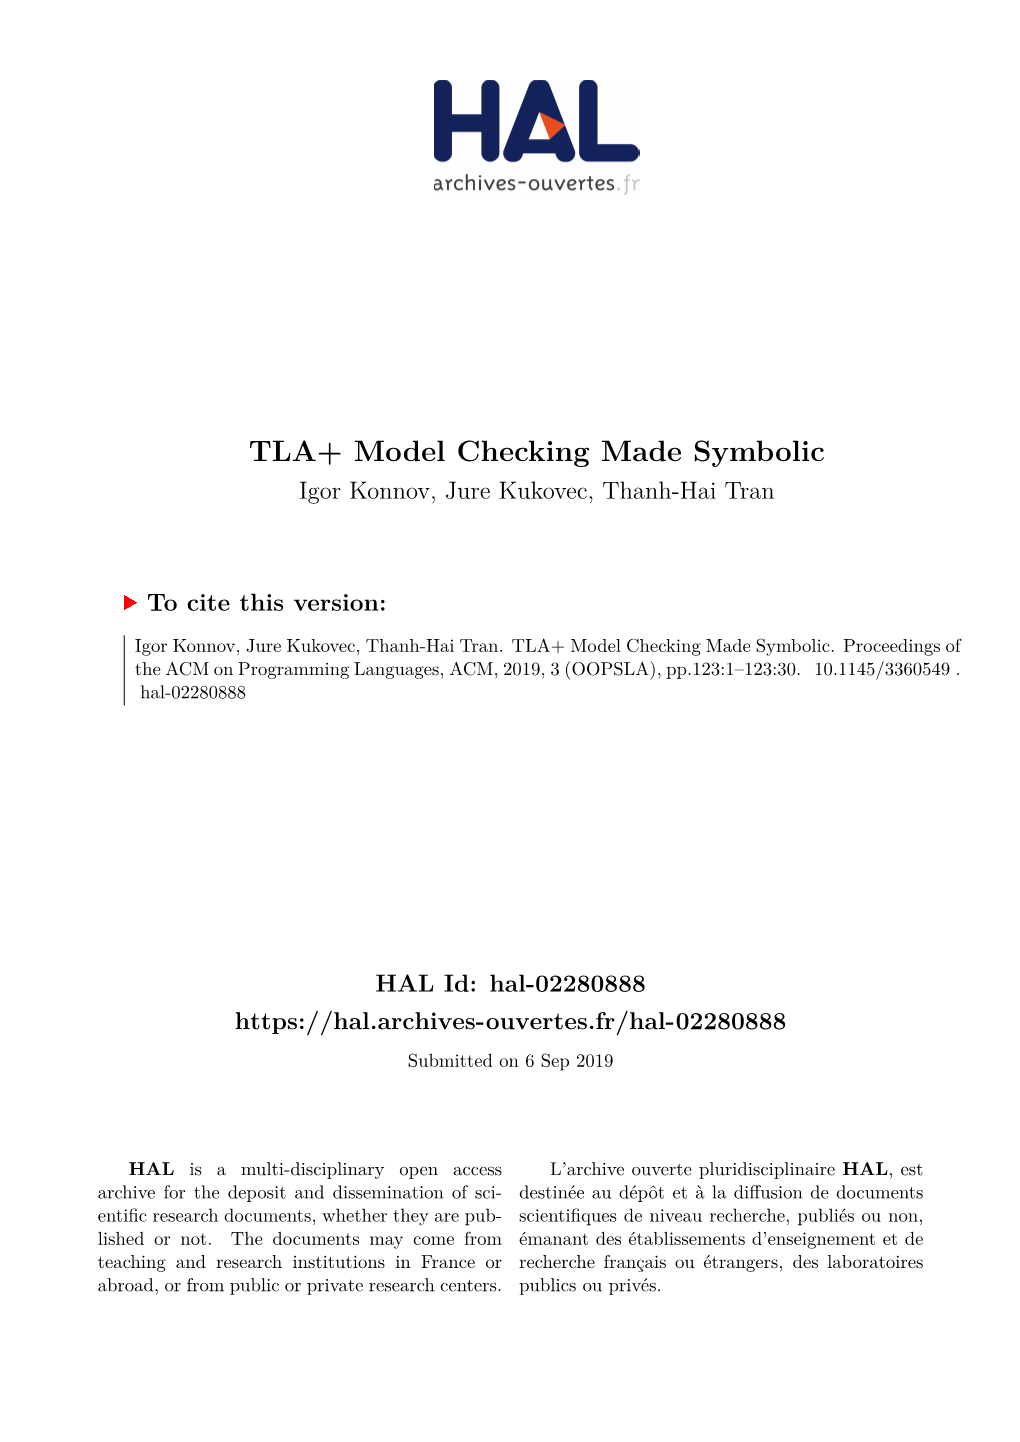 TLA+ Model Checking Made Symbolic Igor Konnov, Jure Kukovec, Thanh-Hai Tran